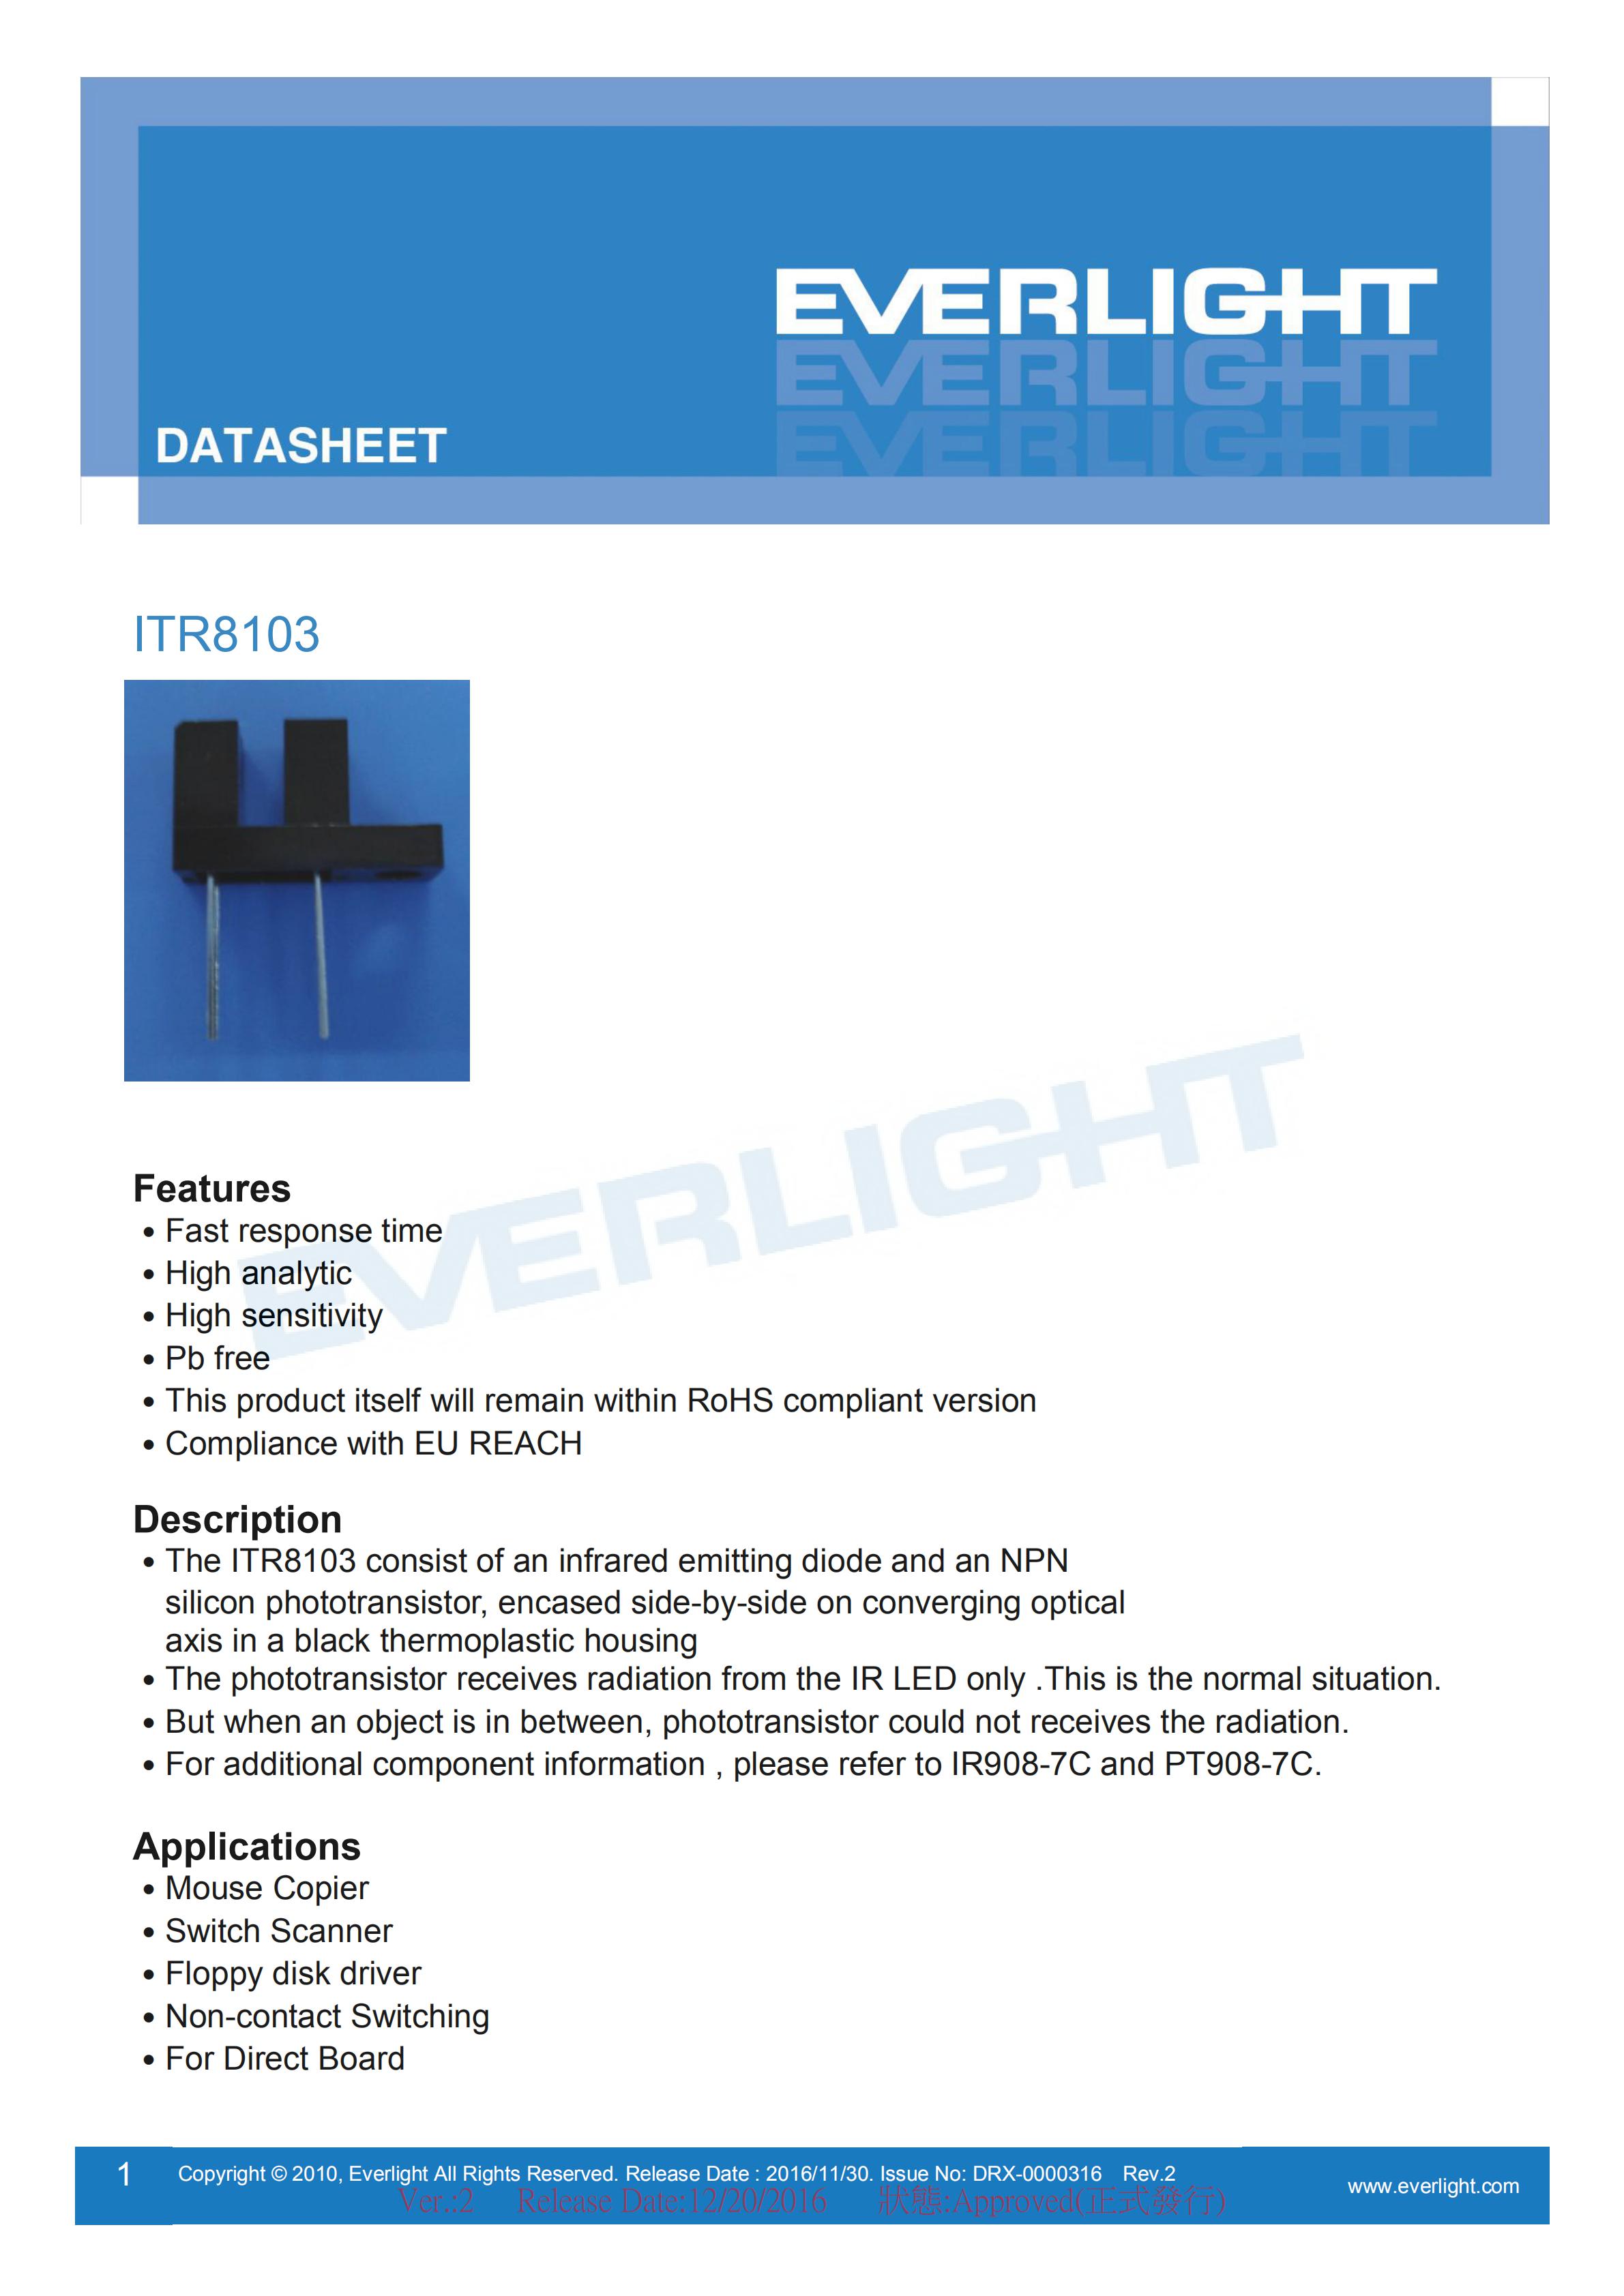 EVERLIGHT Optical Switch ITR8103 Opto Interrupter Datasheet